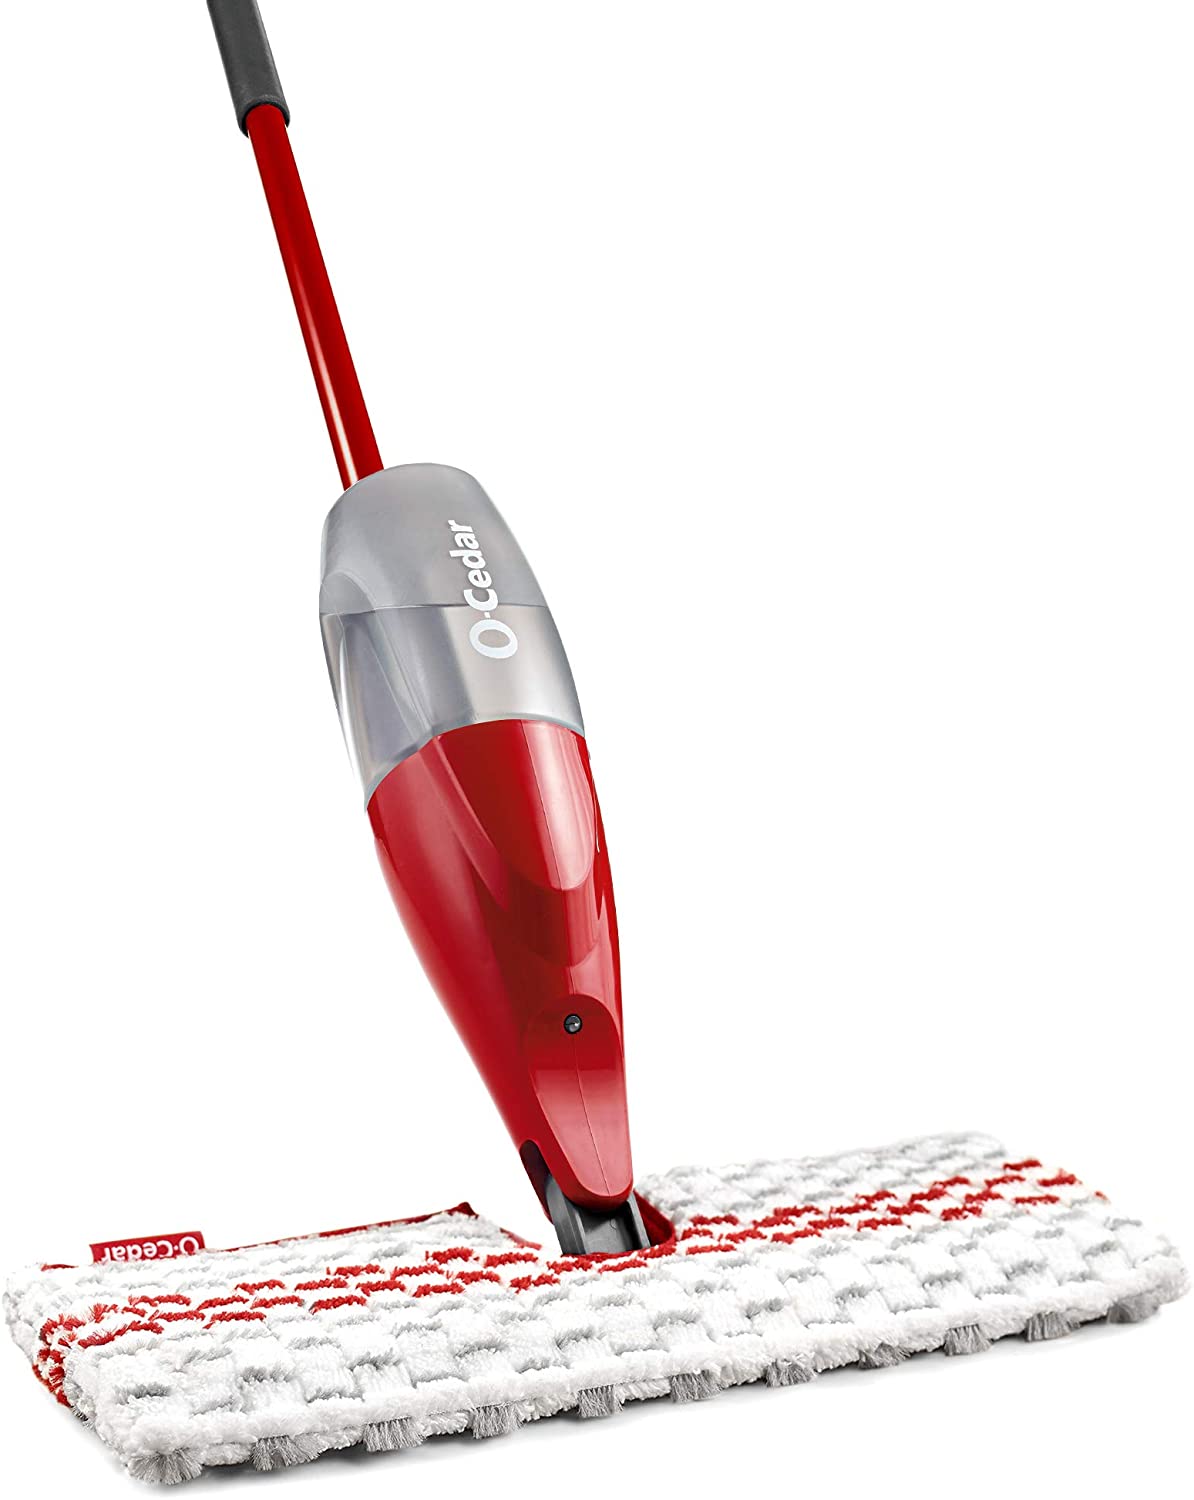 O-Cedar ProMist MAX Microfiber Spray Mop, Red –